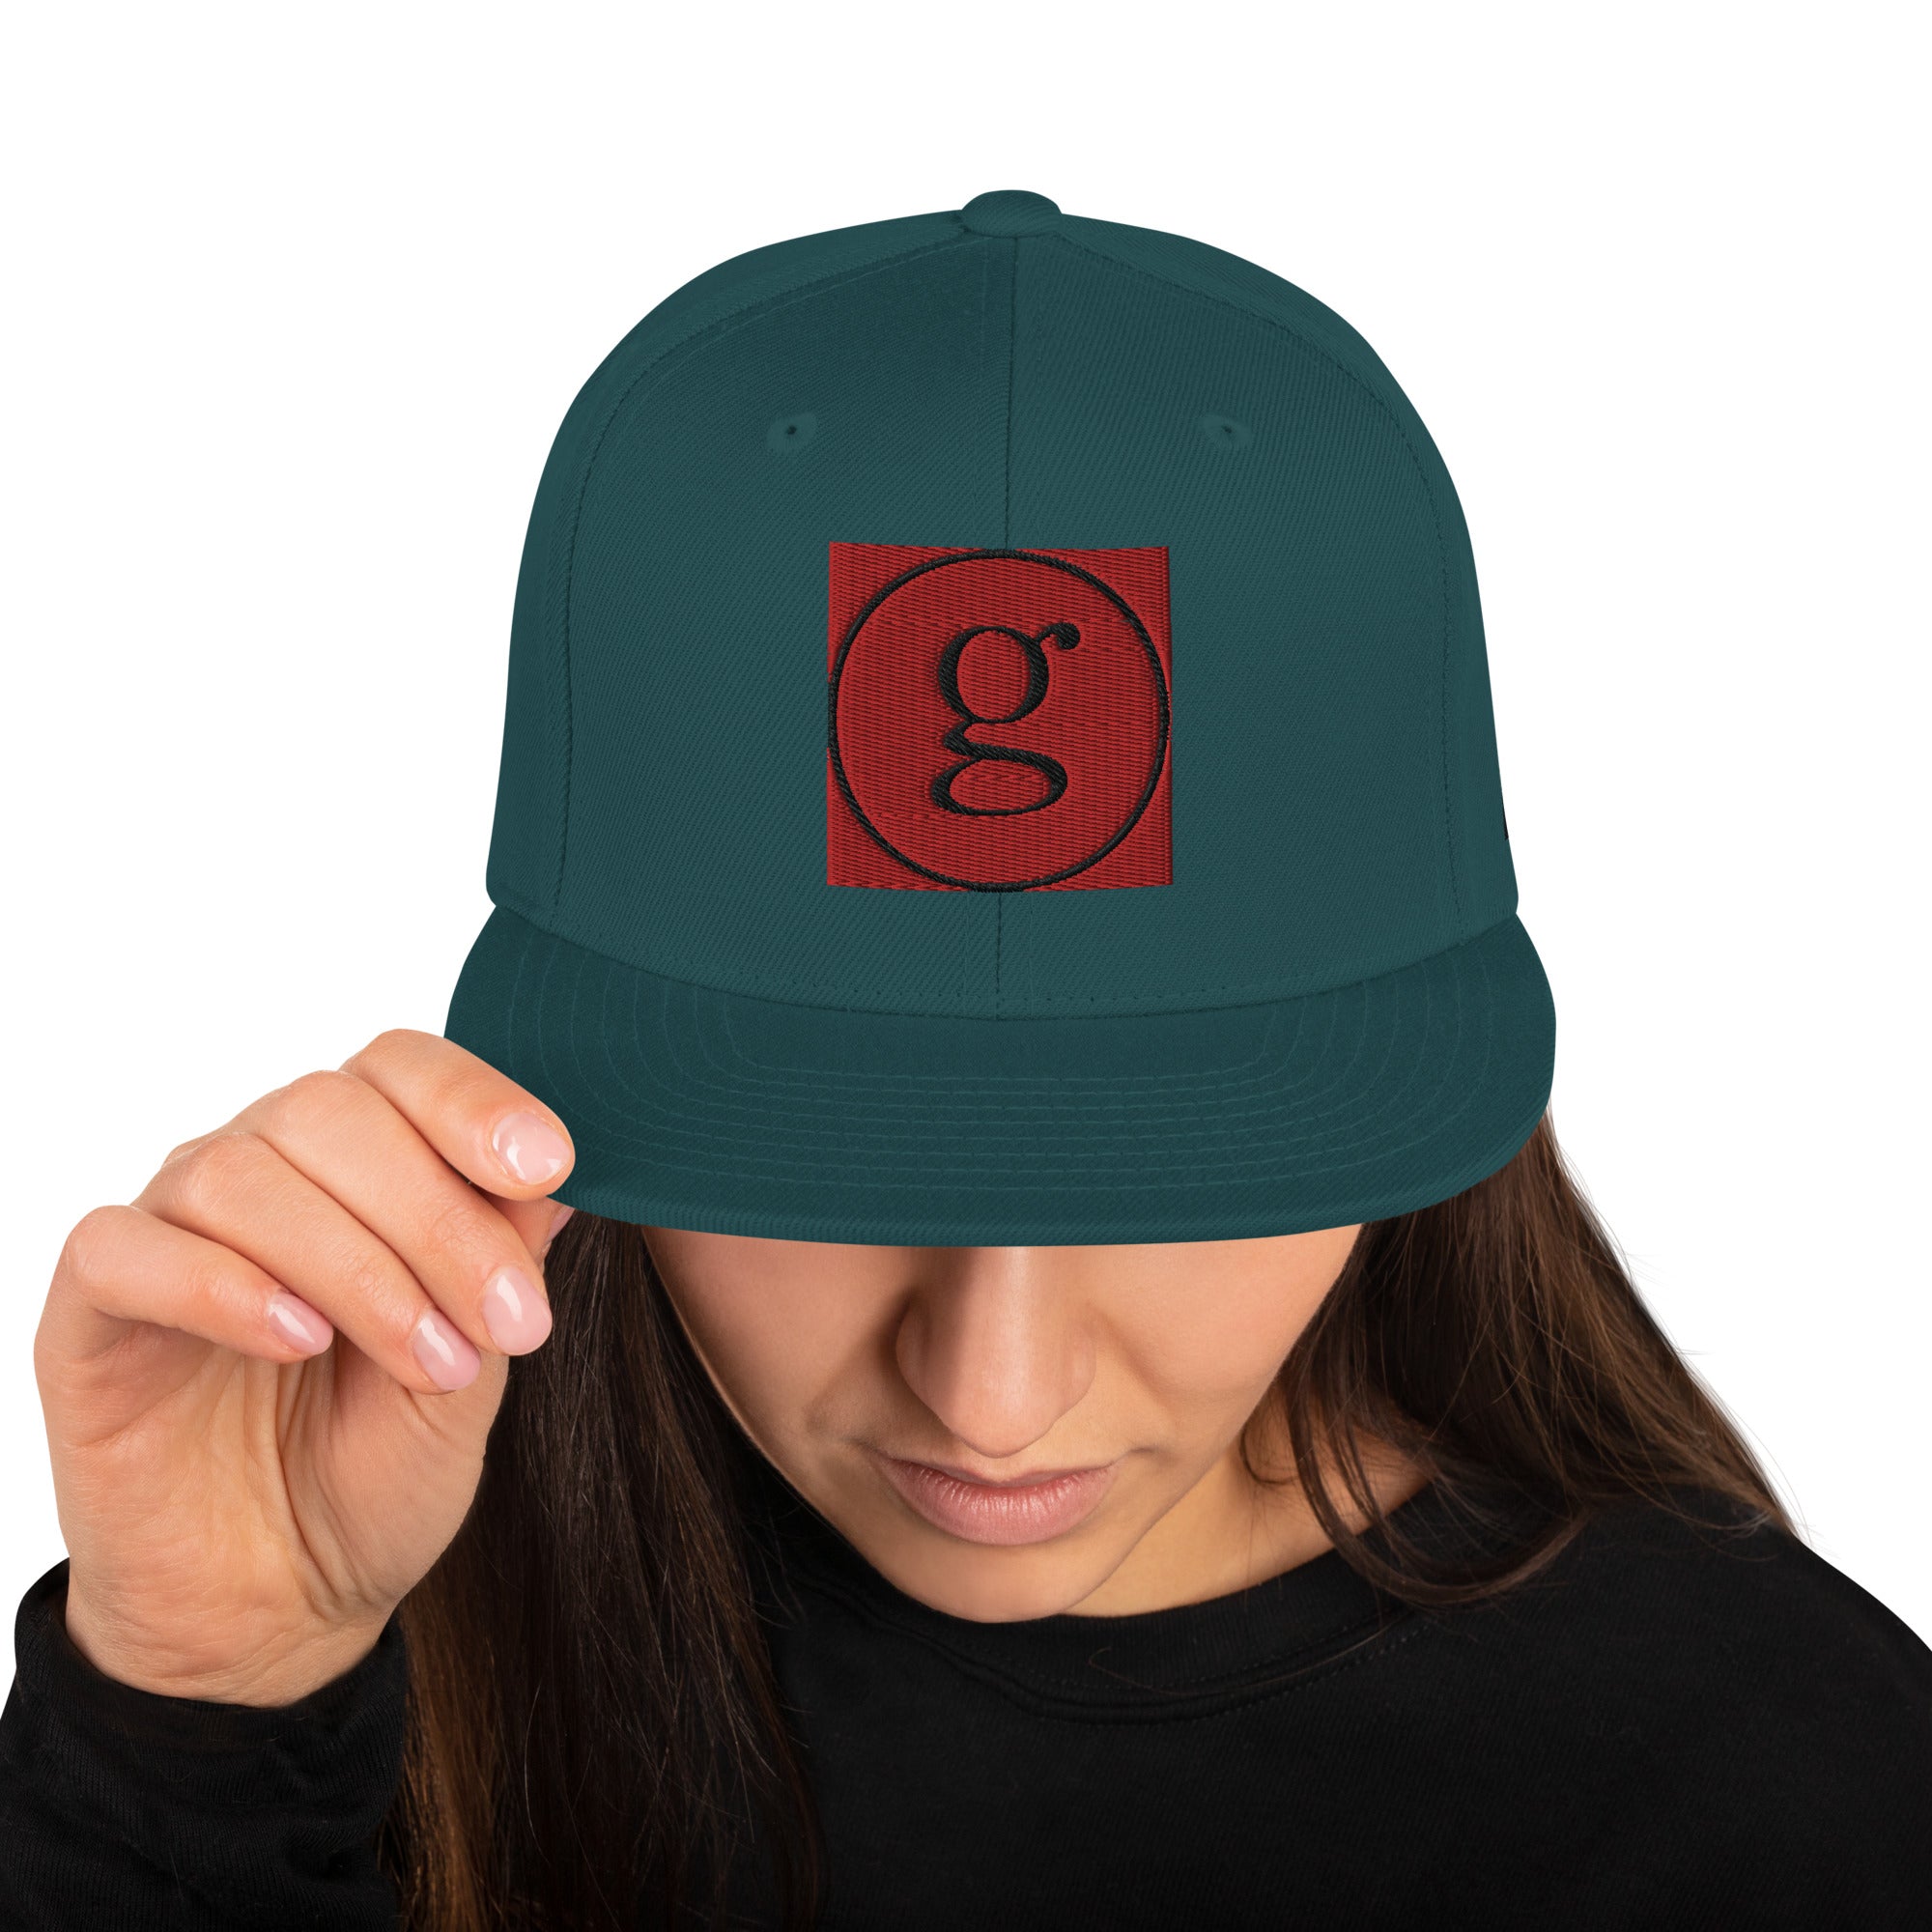 G Snapback Hat